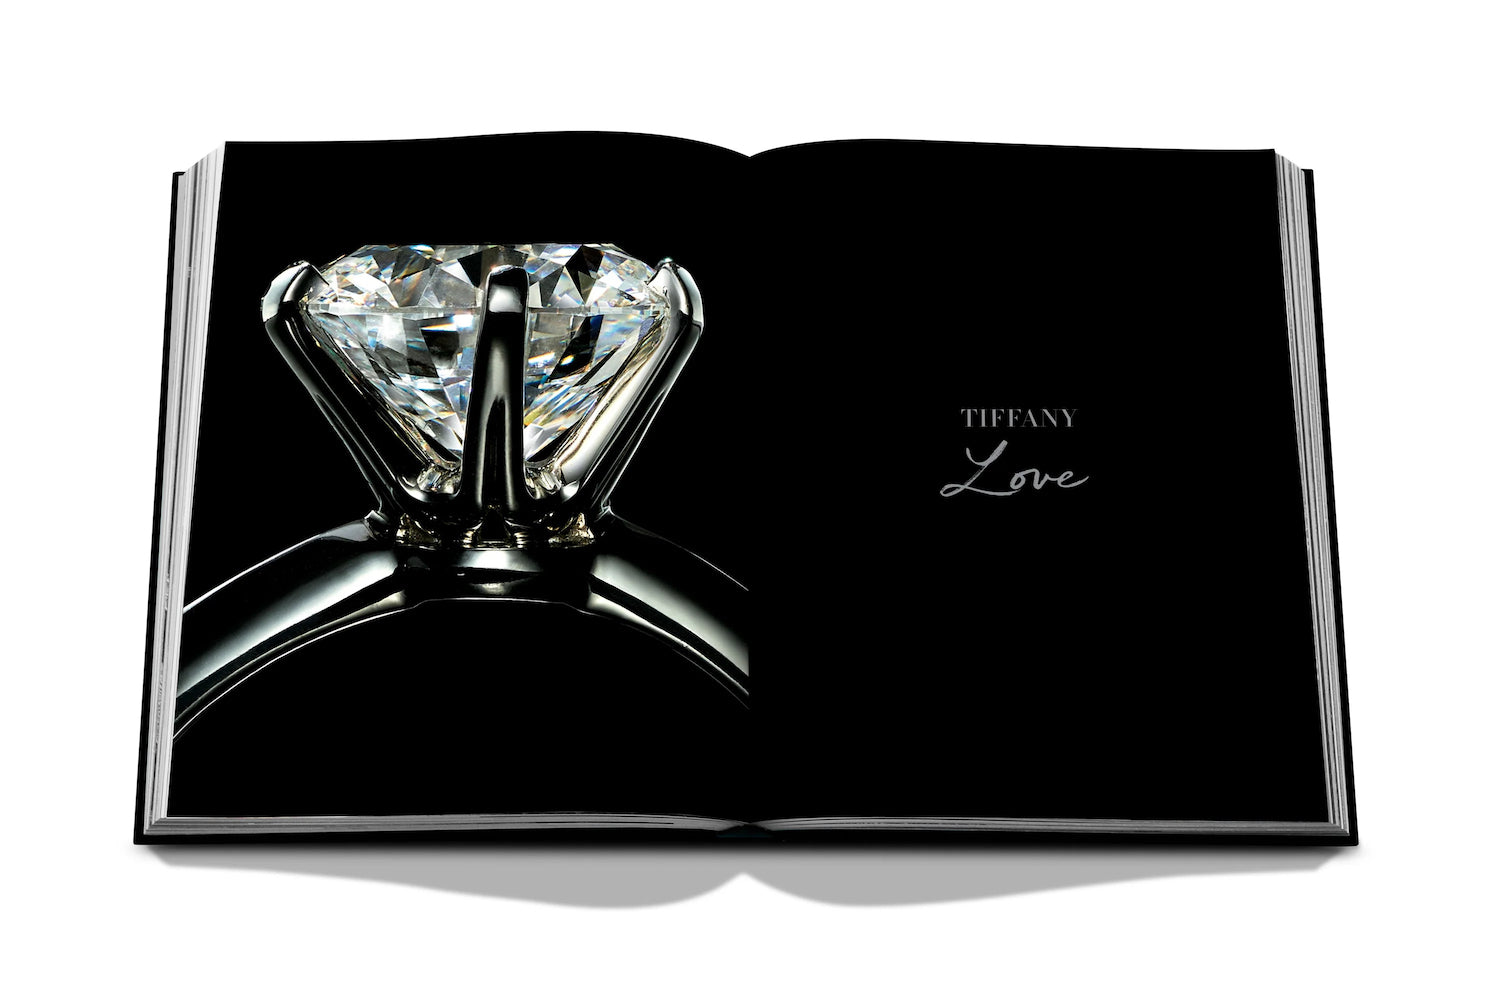 Tiffany & Co: Vision & Virtuosity - Ultimate edition